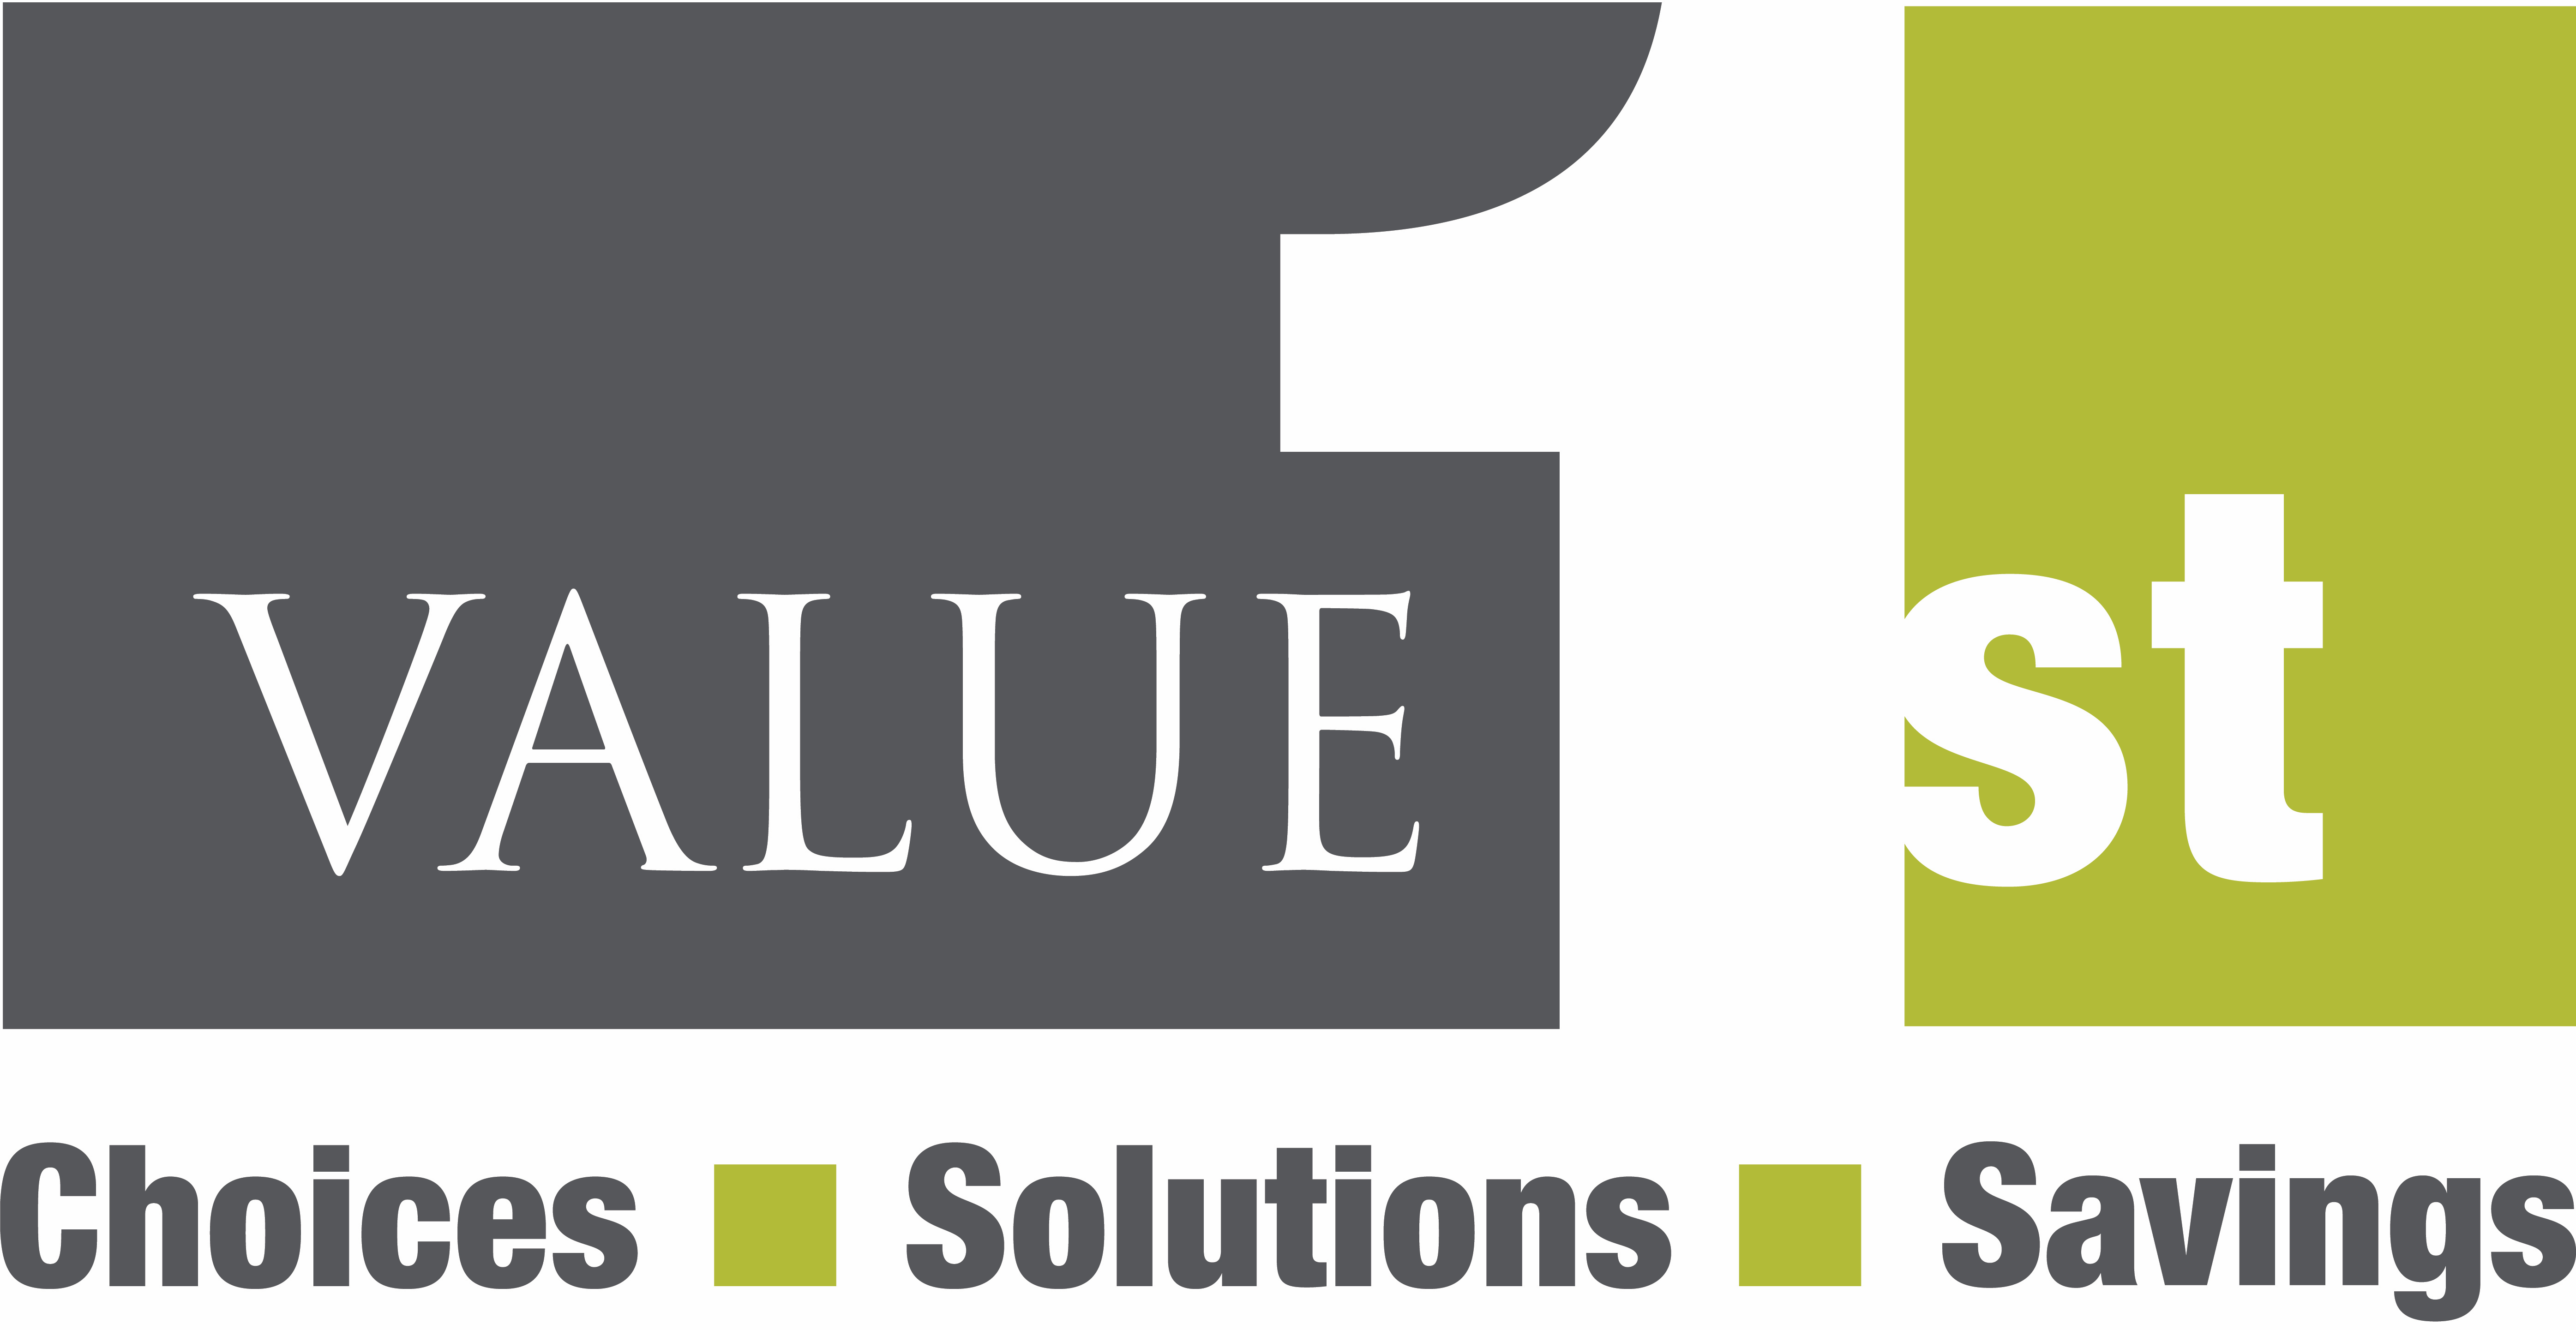 Value First logo